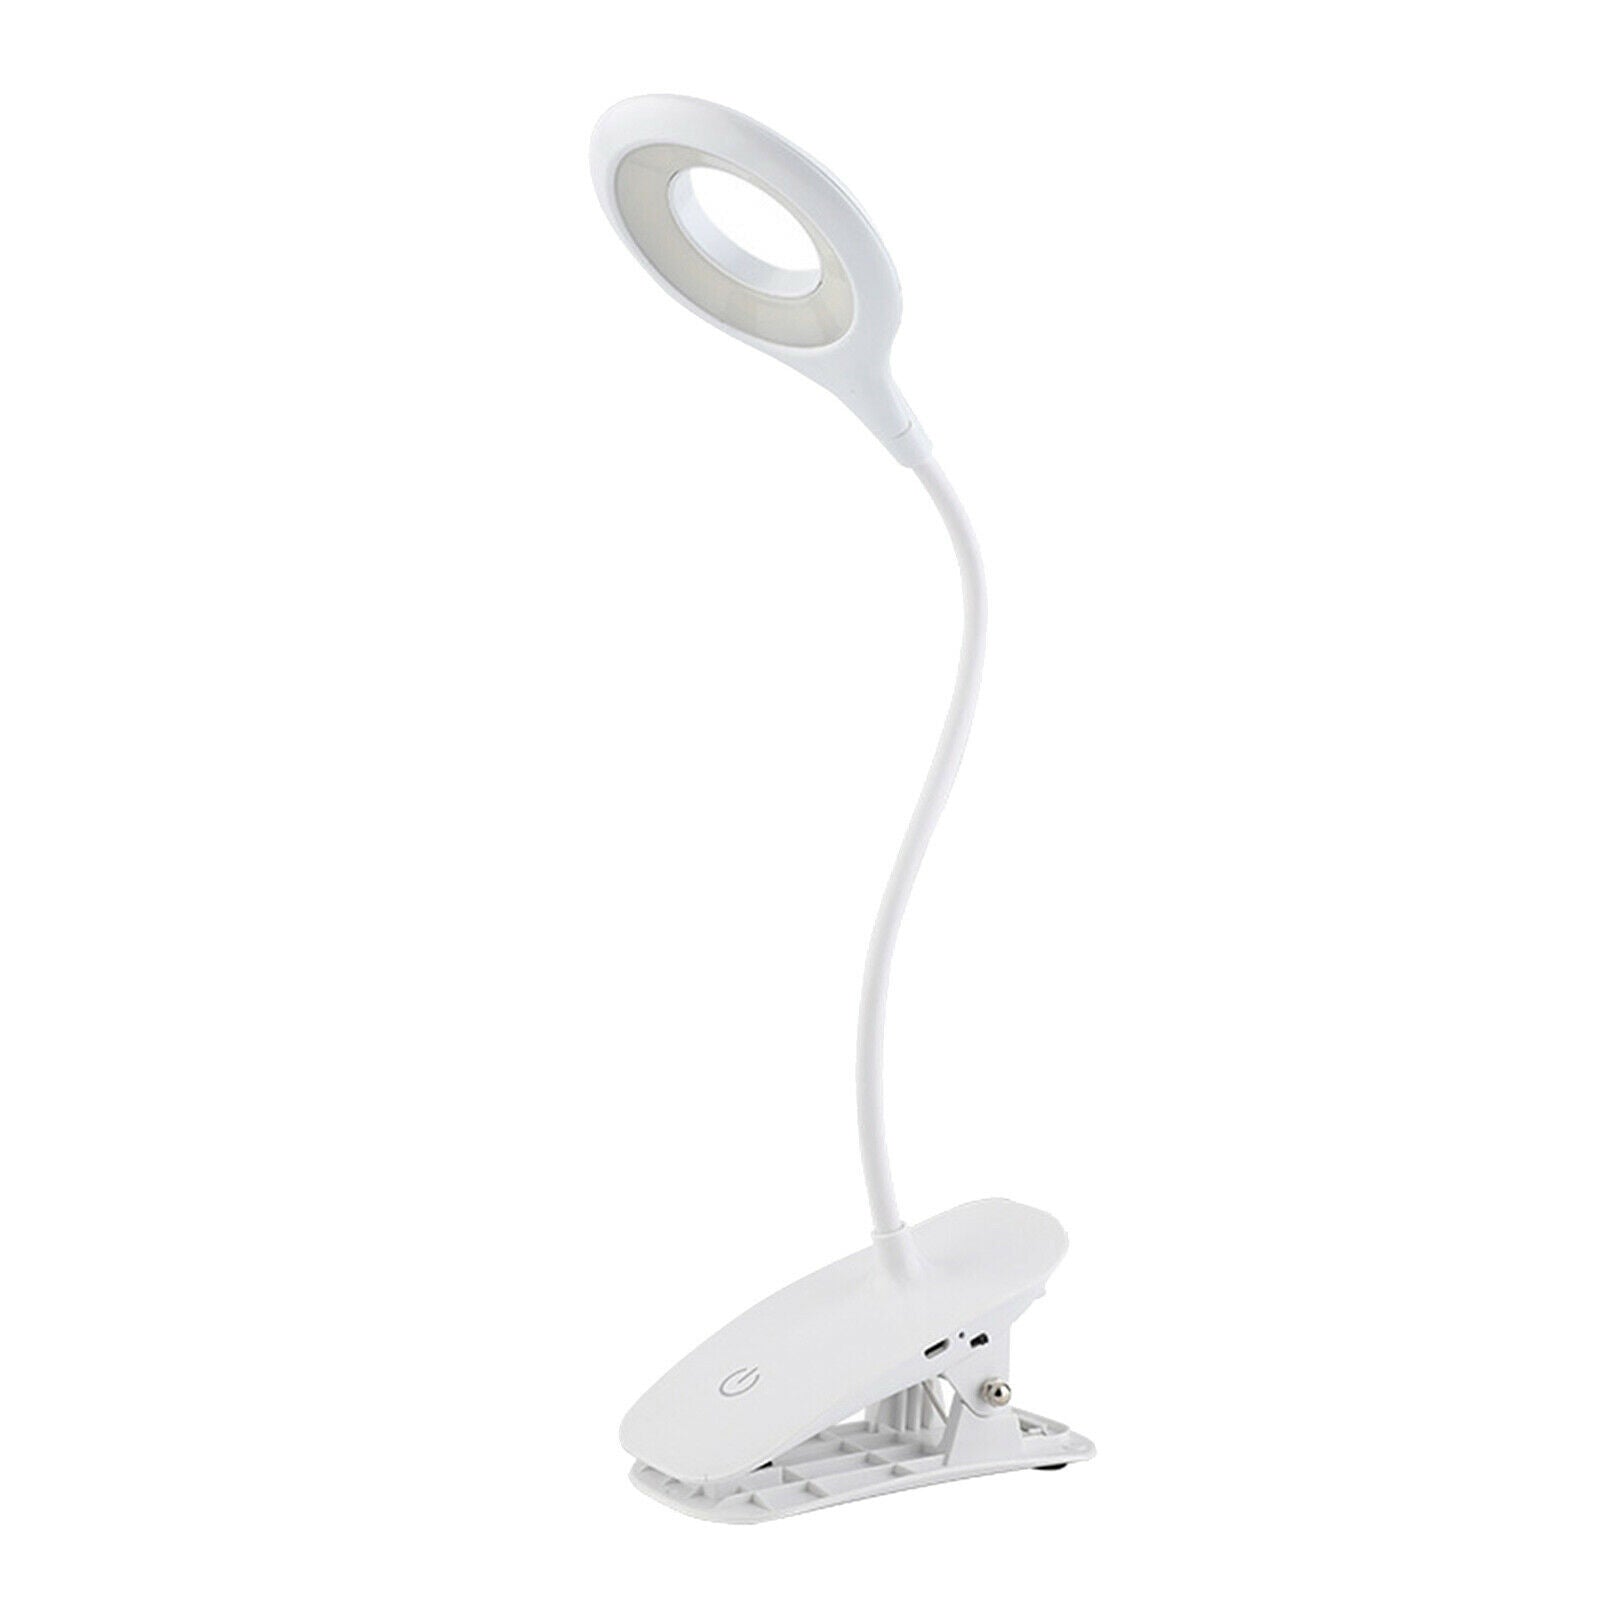 Flexible Reading Light USB Clip On LED Touch Desk Table Bed Headboard Lamp